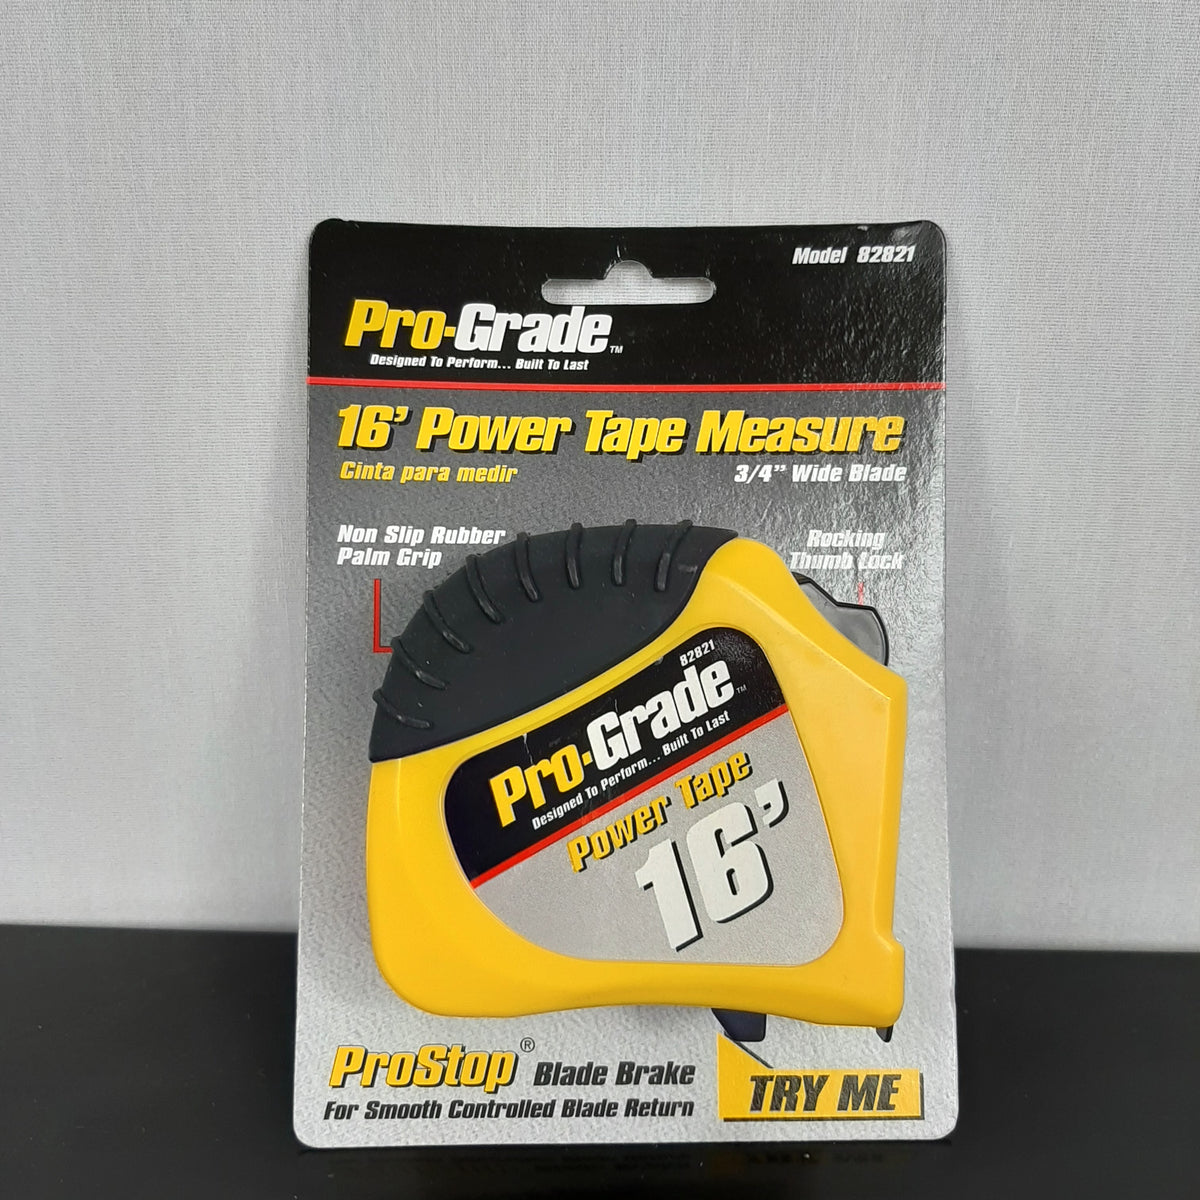 Performax® 12' Touch Lock Tape Measure at Menards®